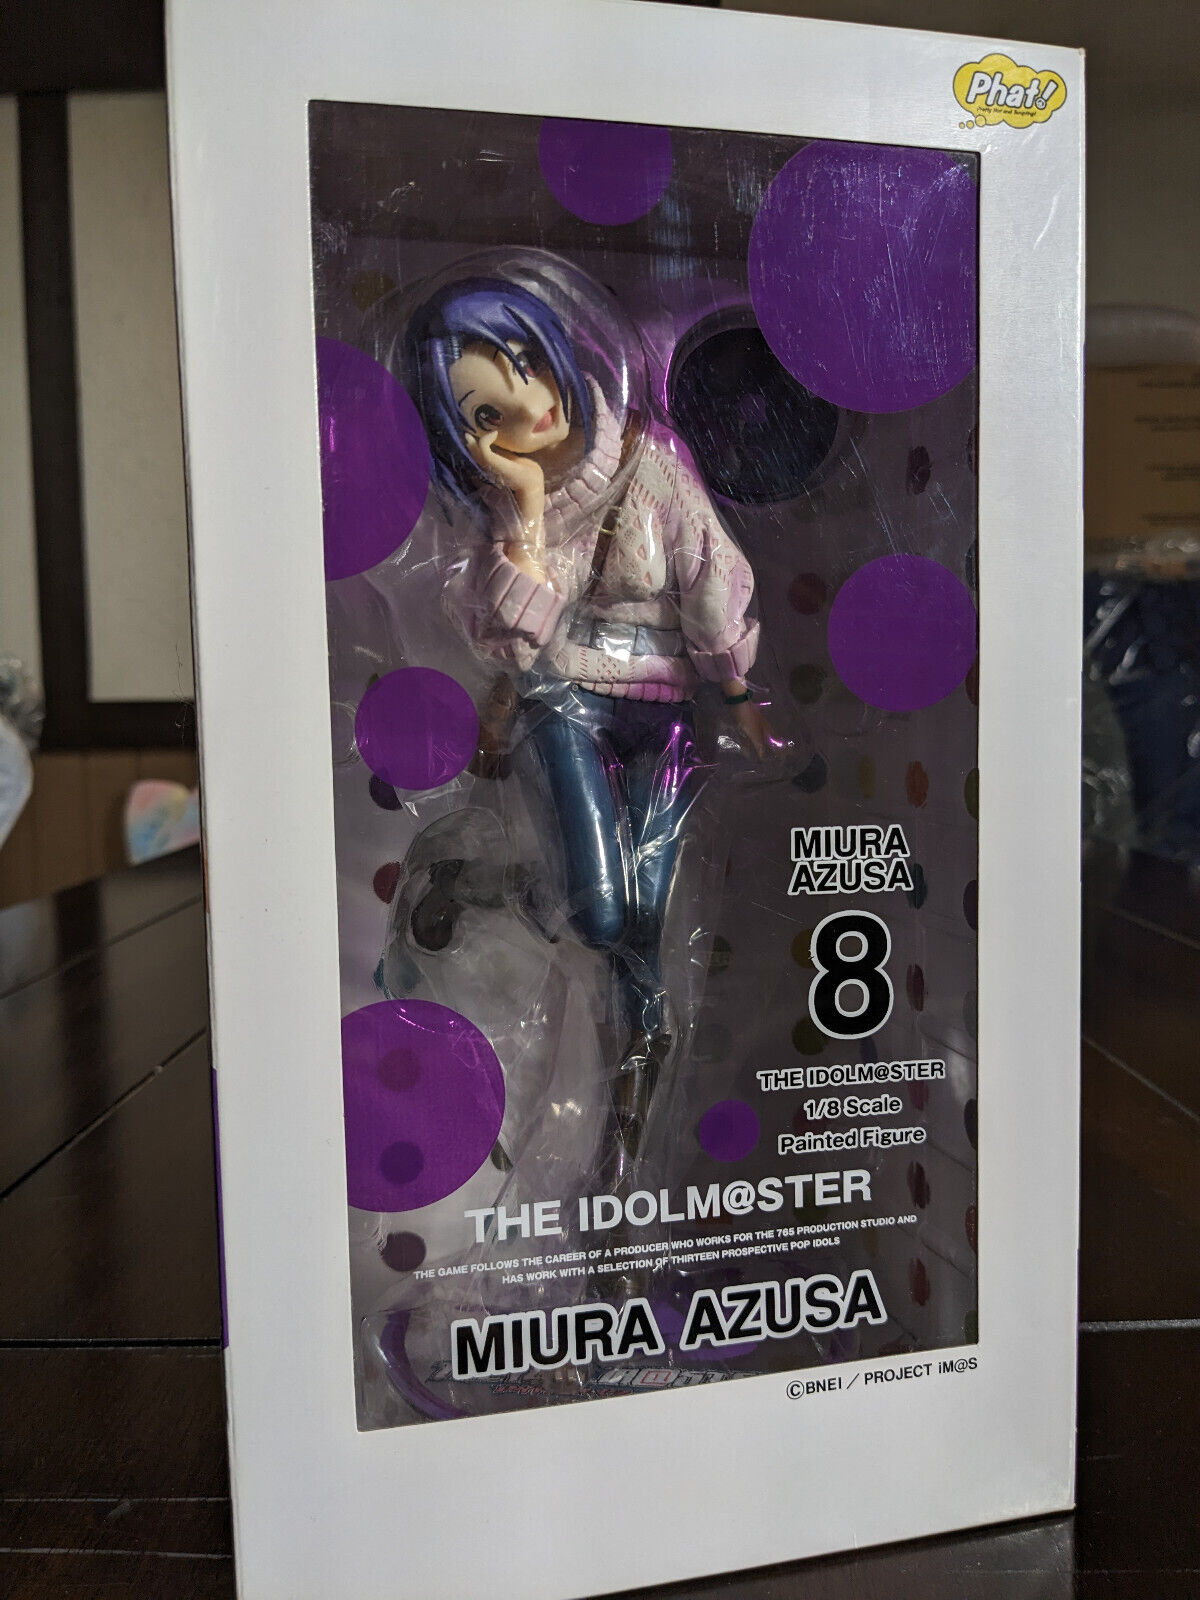 Phat Idolm@ster Azusa Miura DVD Jacket Ver. 1/8 Scale Figure